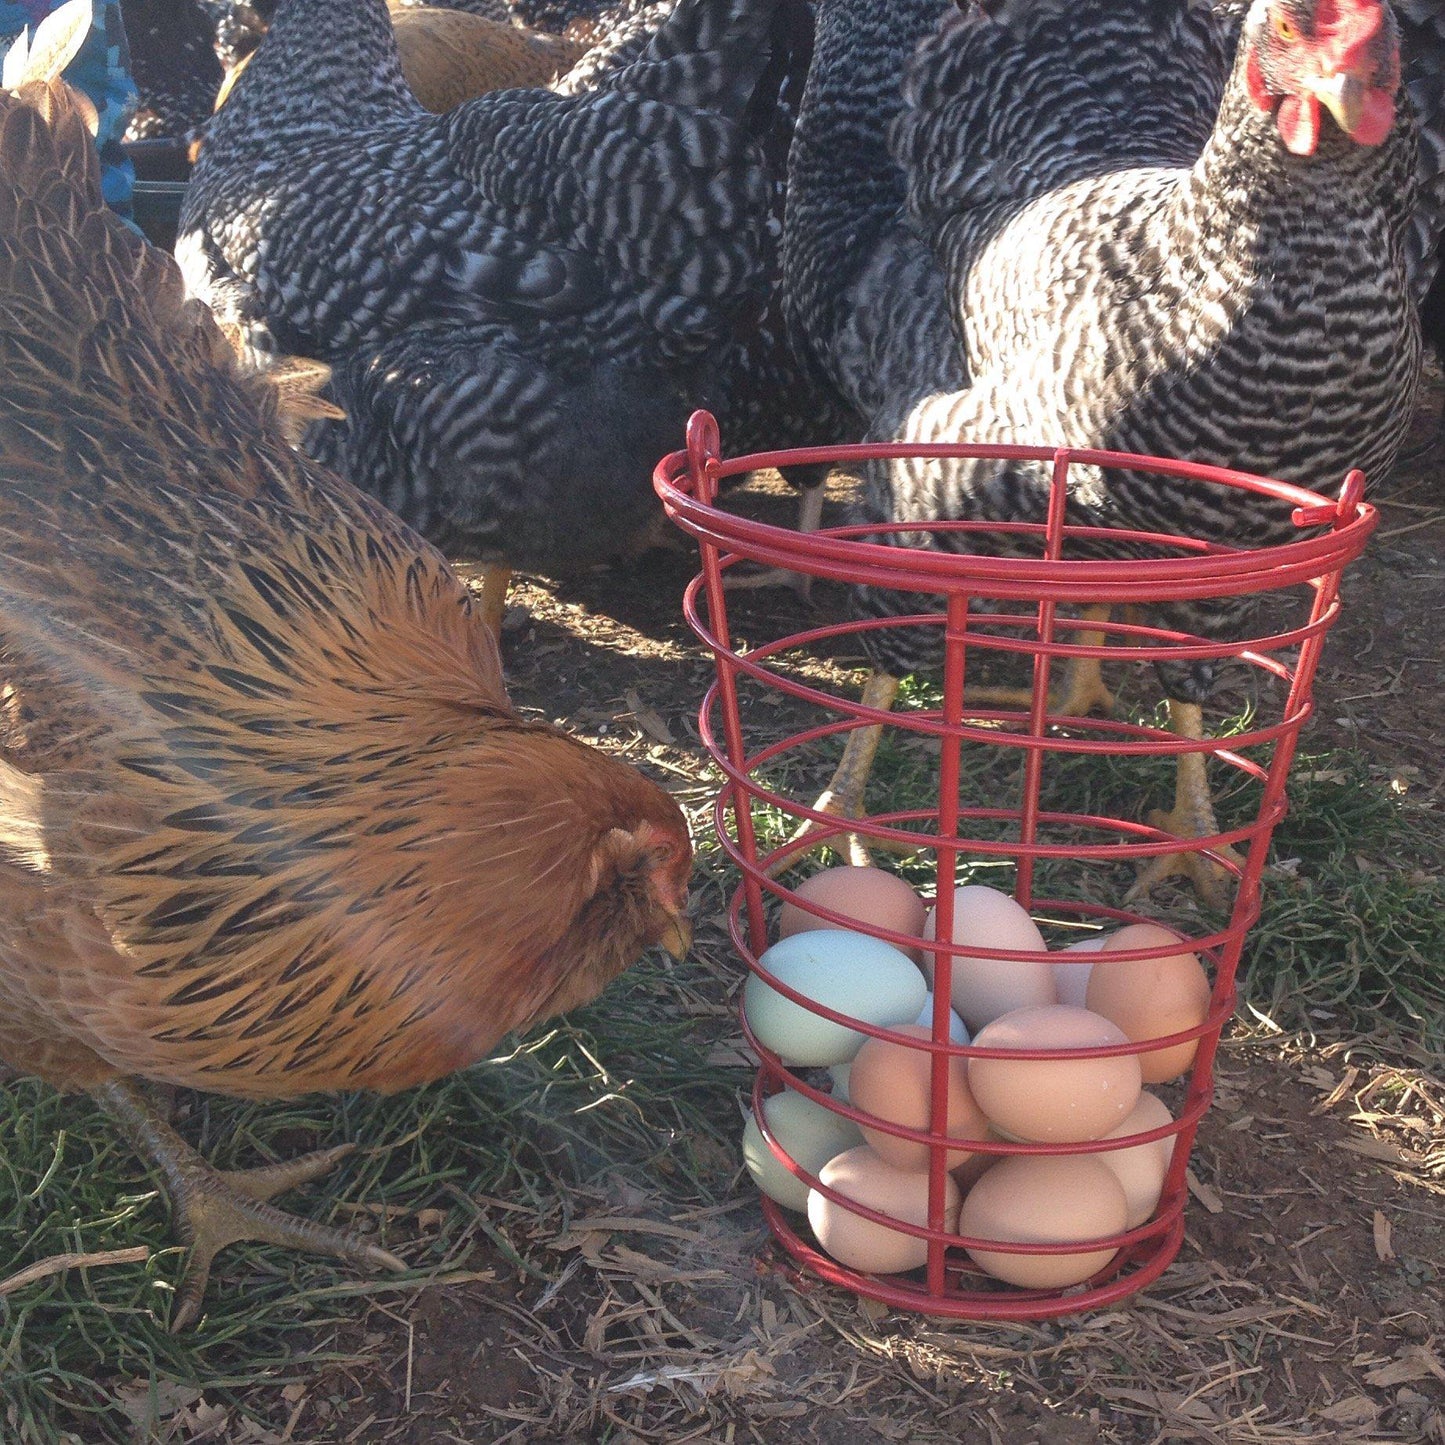 Farm-Fresh Eggs - 1 Dozen